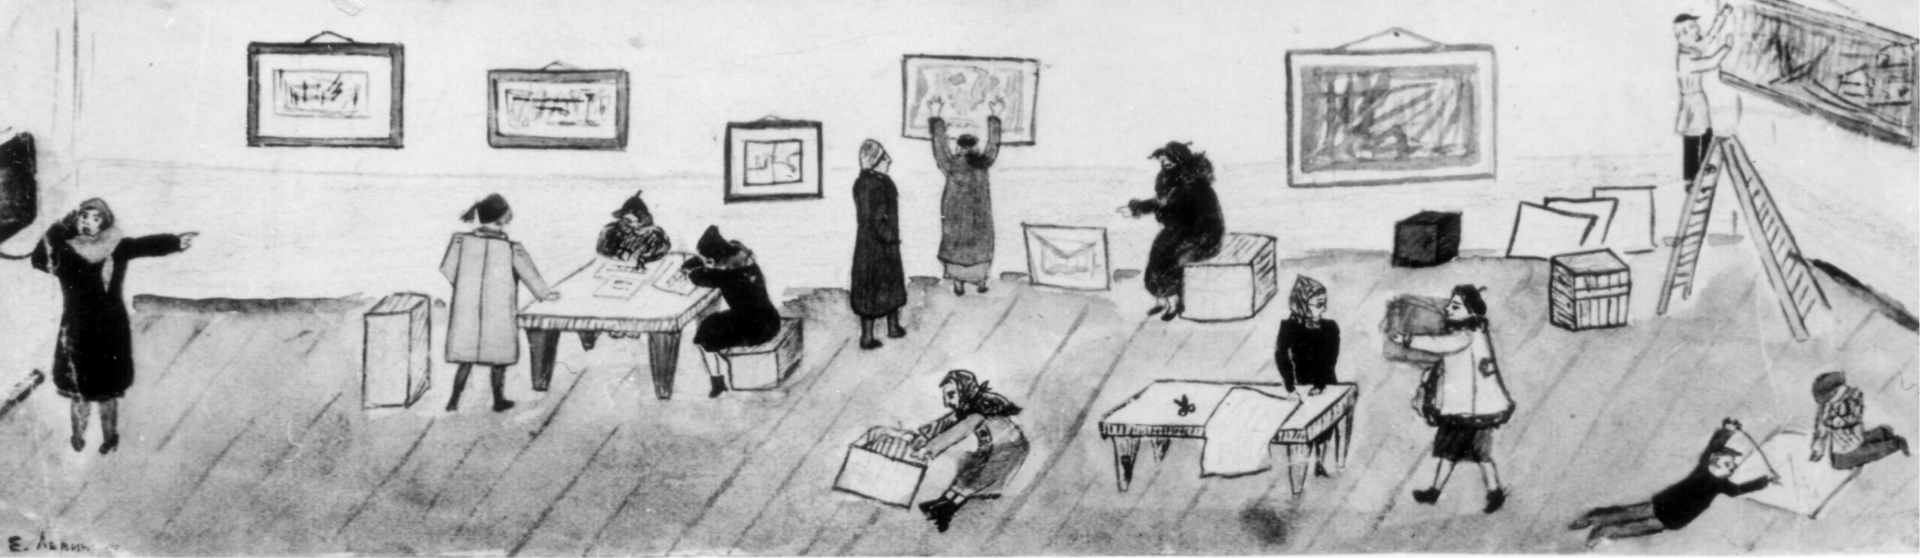 Подготовка выставки. Рисунок Кати Левинсон. Кустанай, 1942 г.